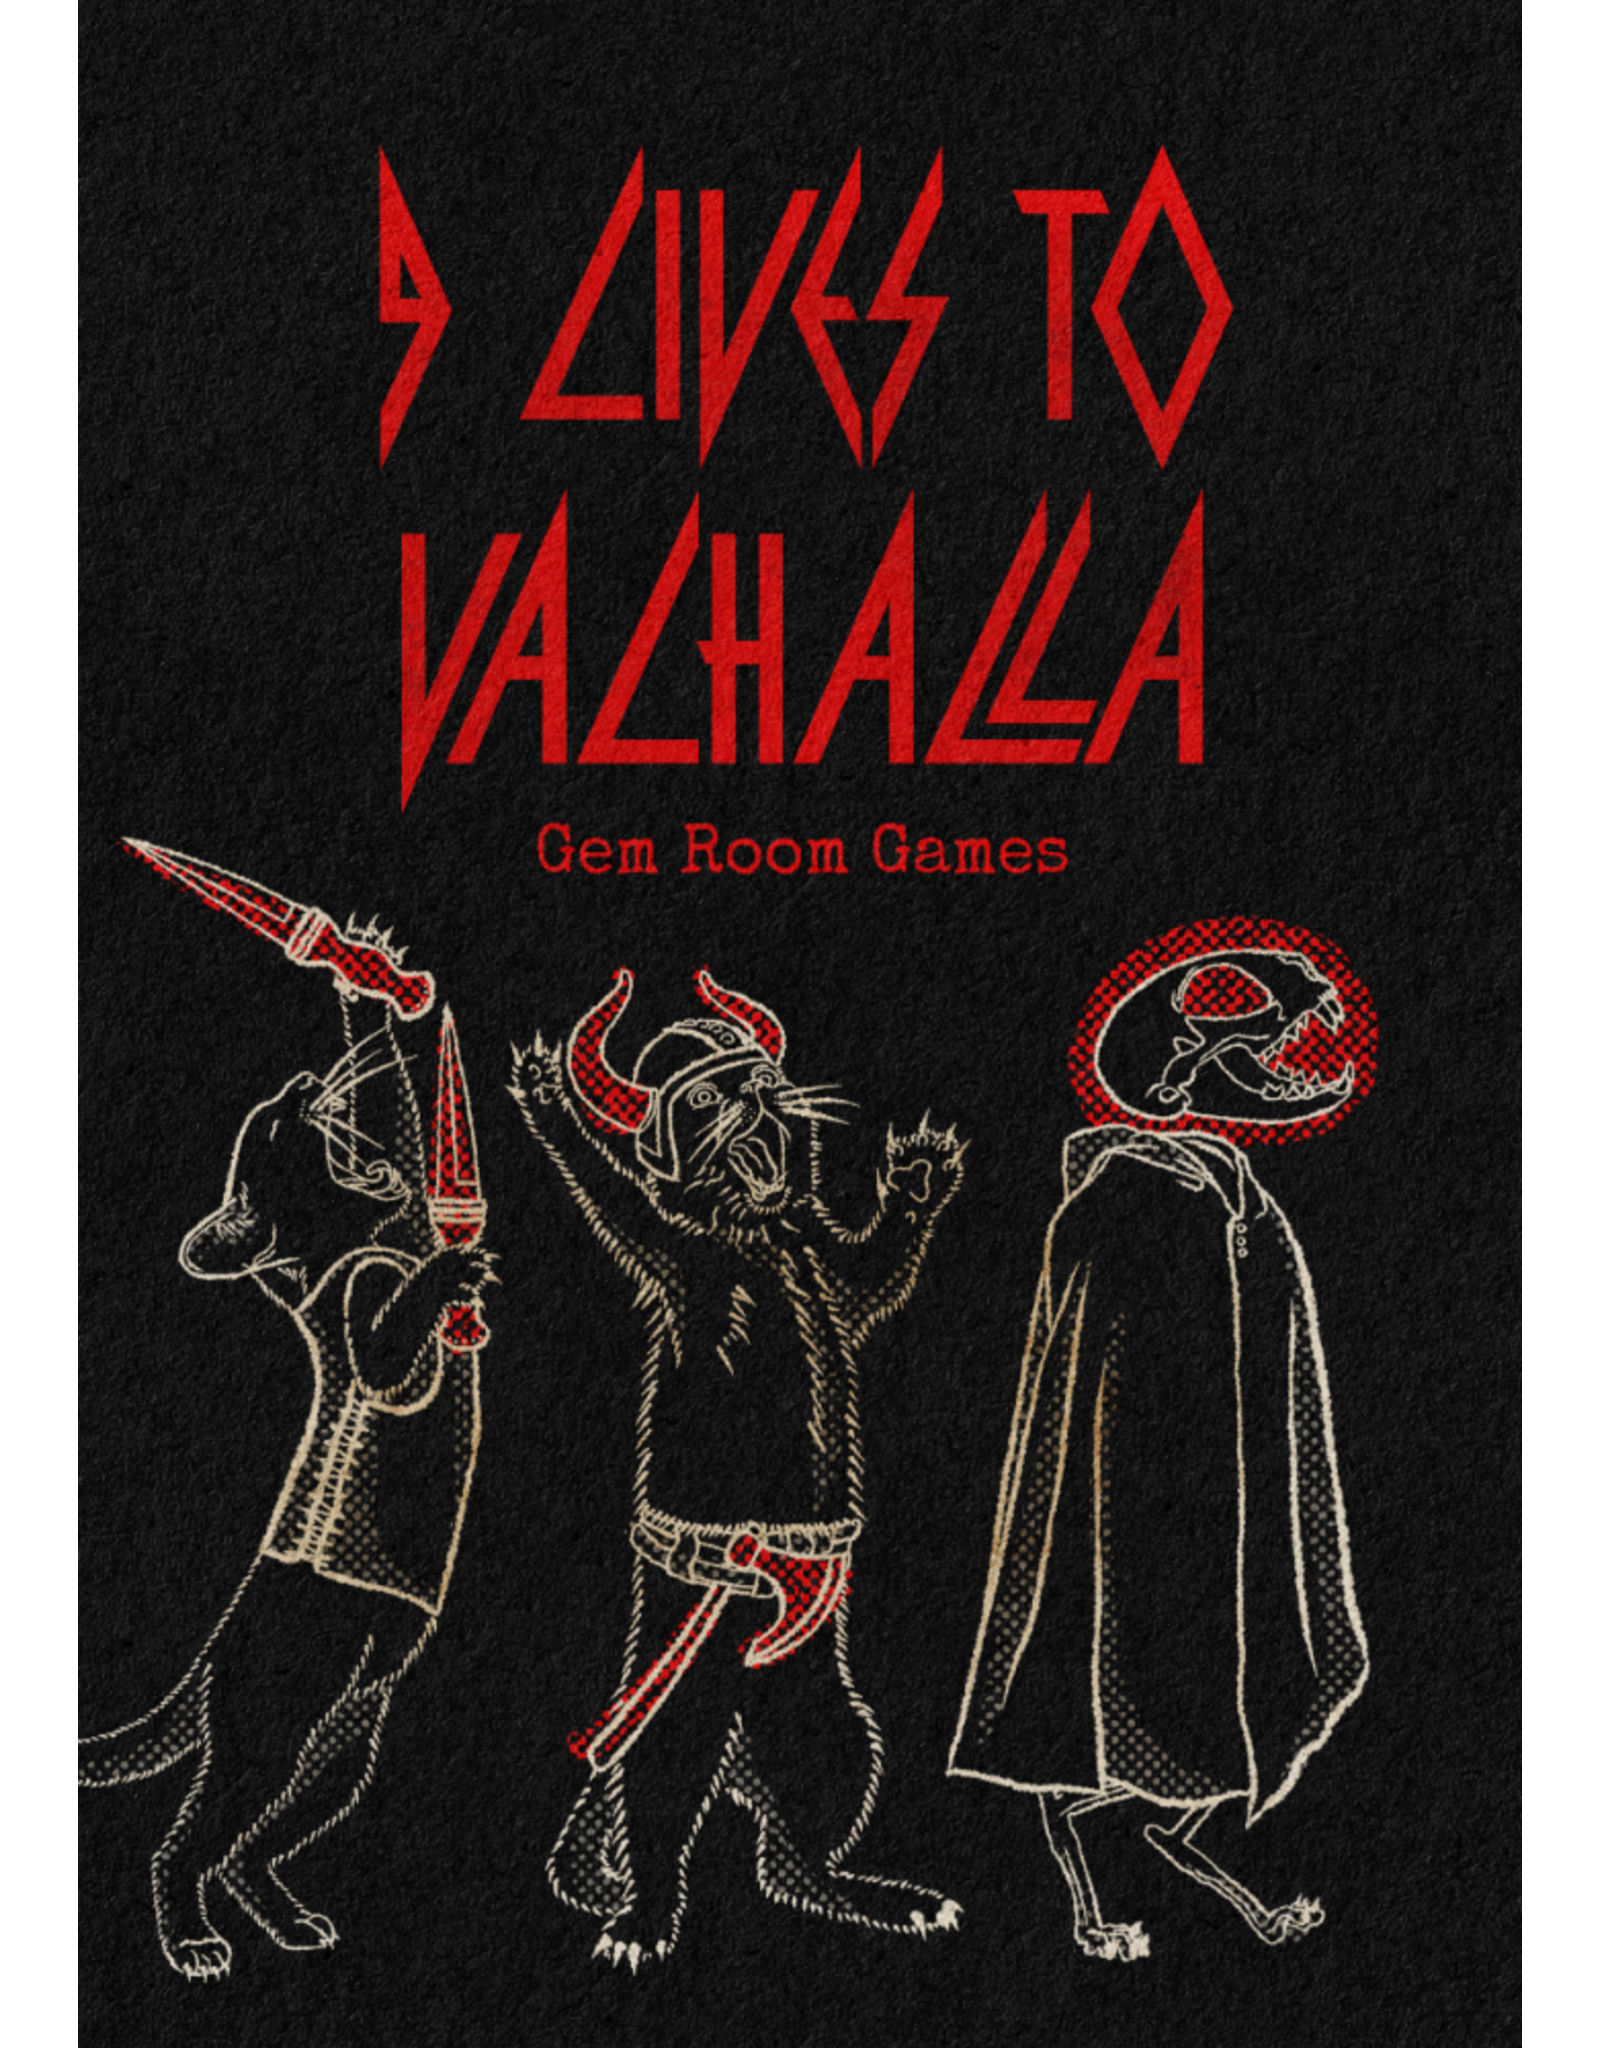 9 Lives to Valhalla